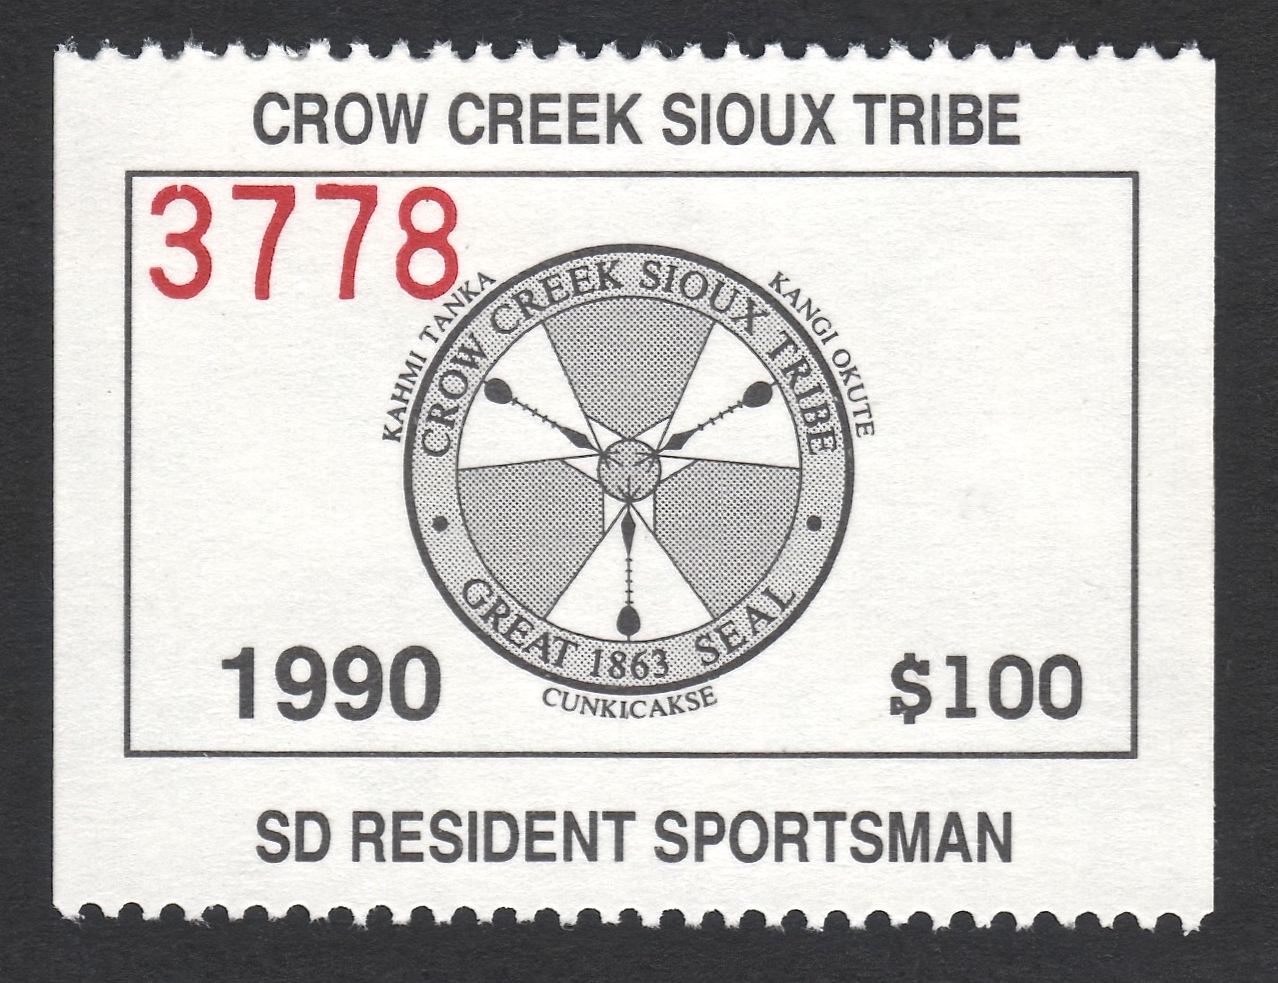 1990 Crow Creek SD Resident Sportsman